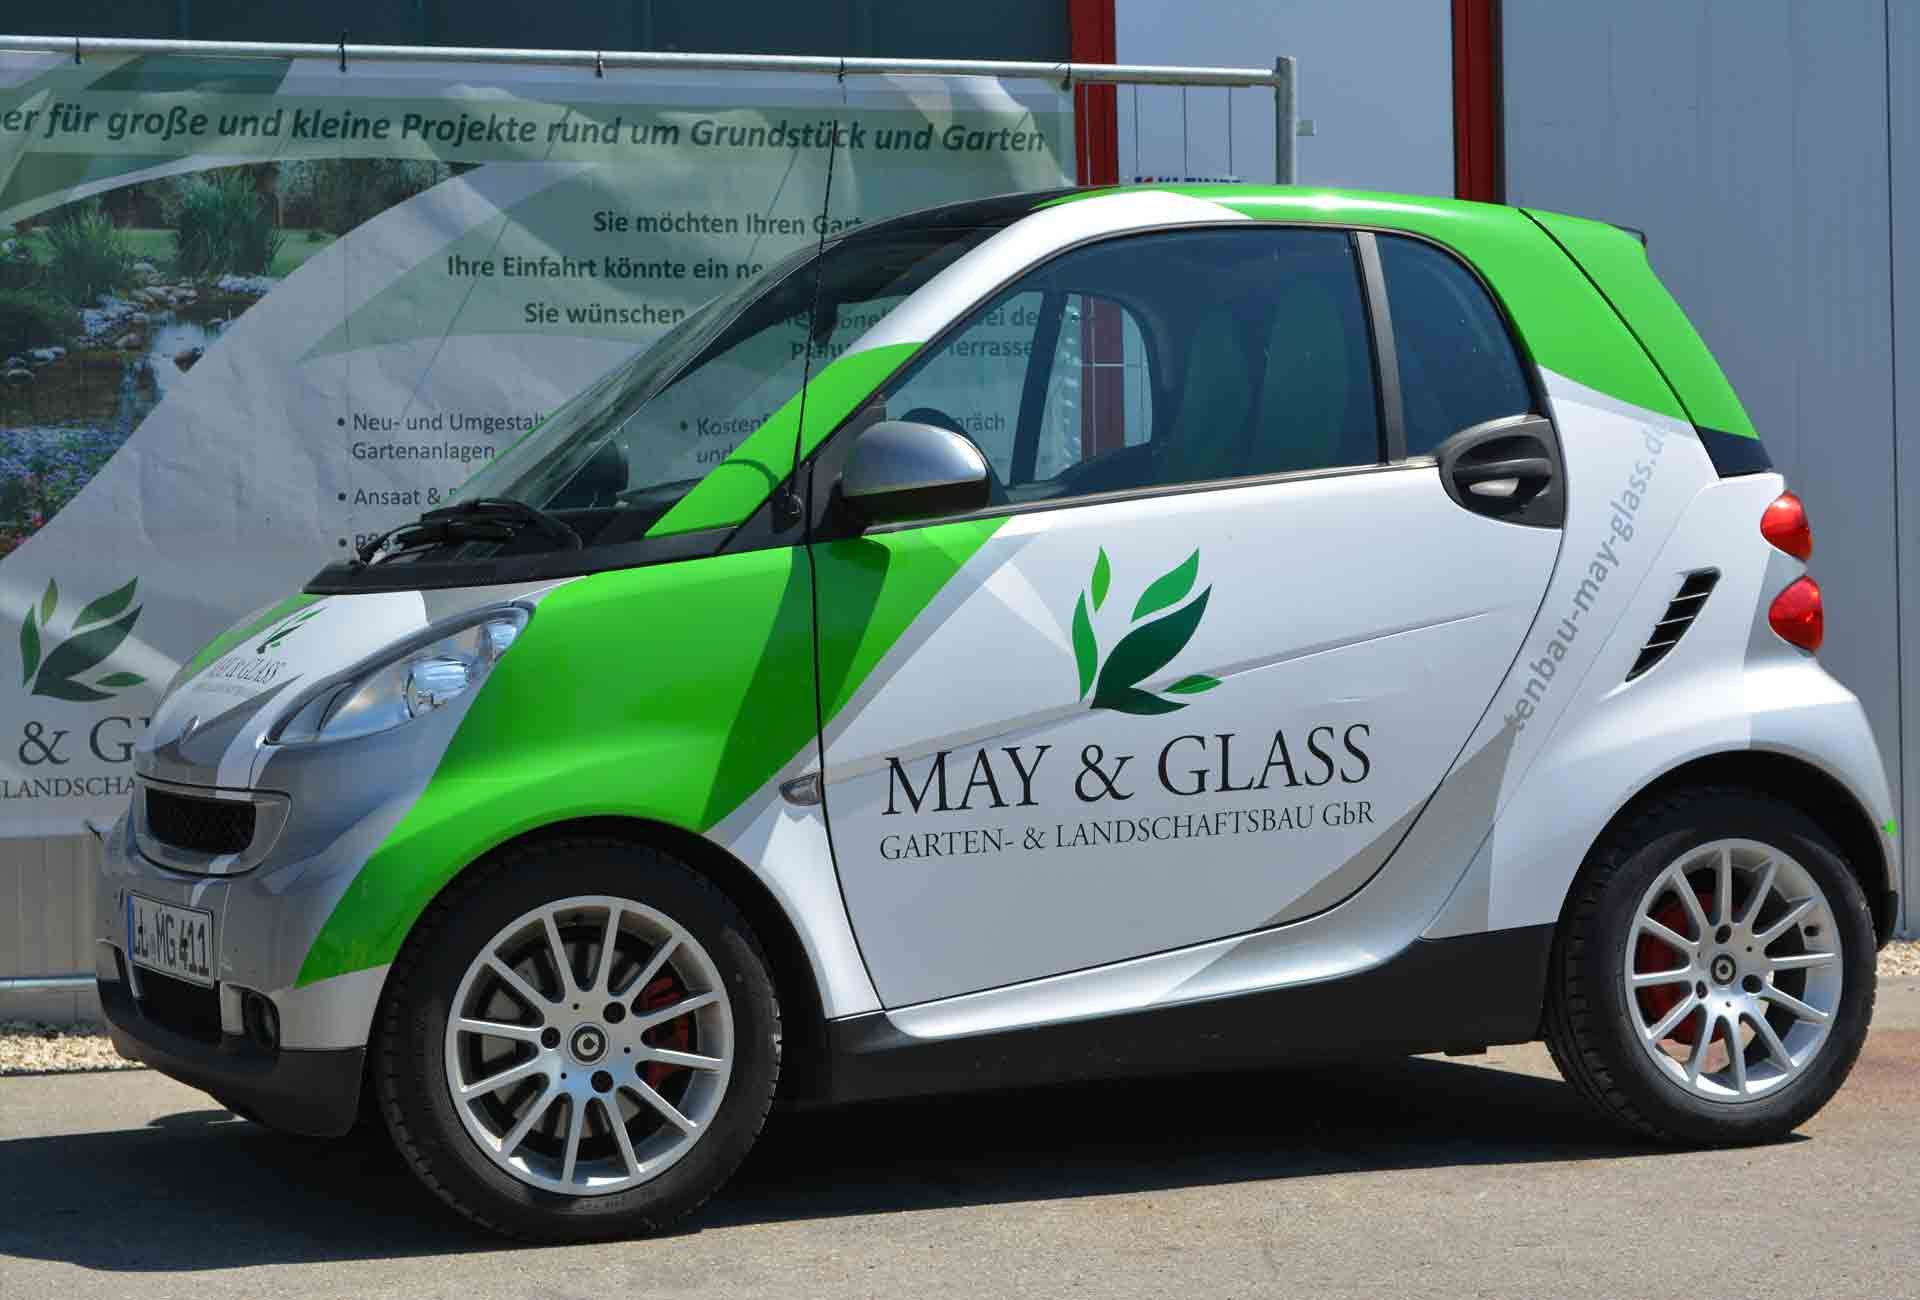 May & Glass - Gartenbau Landsberg